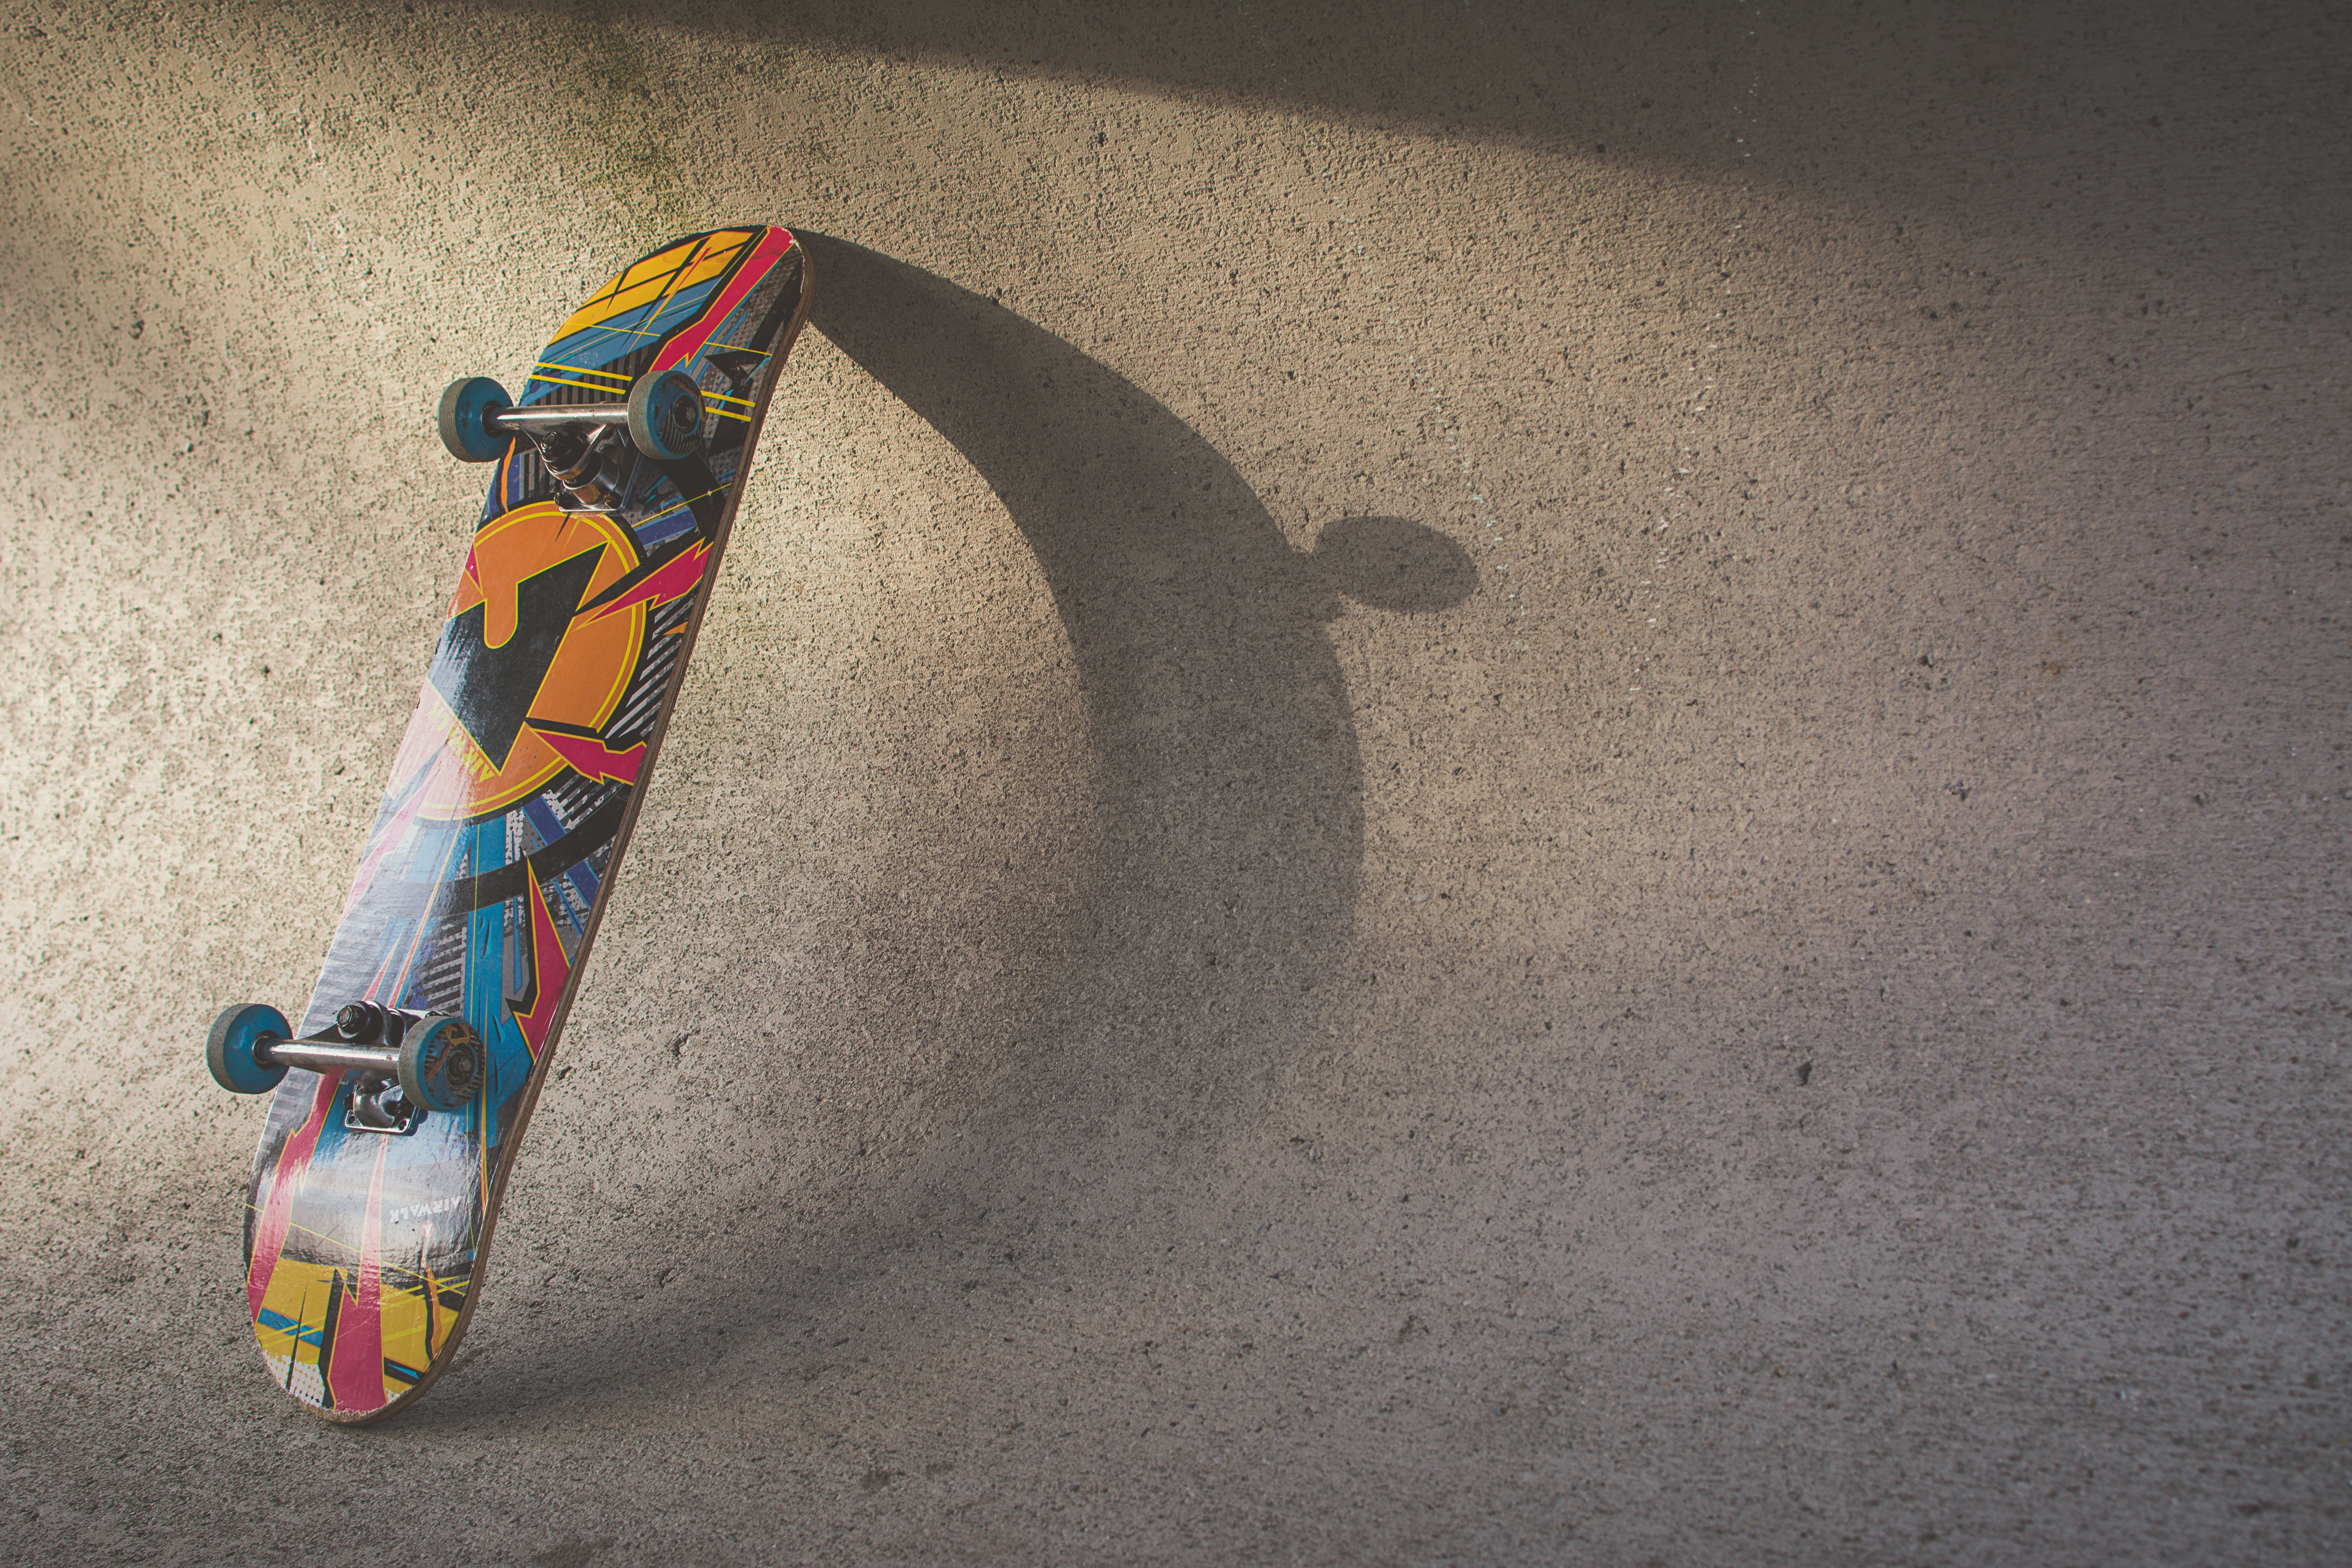 Multicolored Skateboard Leaning on Wall, Asphalt, Skateboard, Wall, Street, HQ Photo